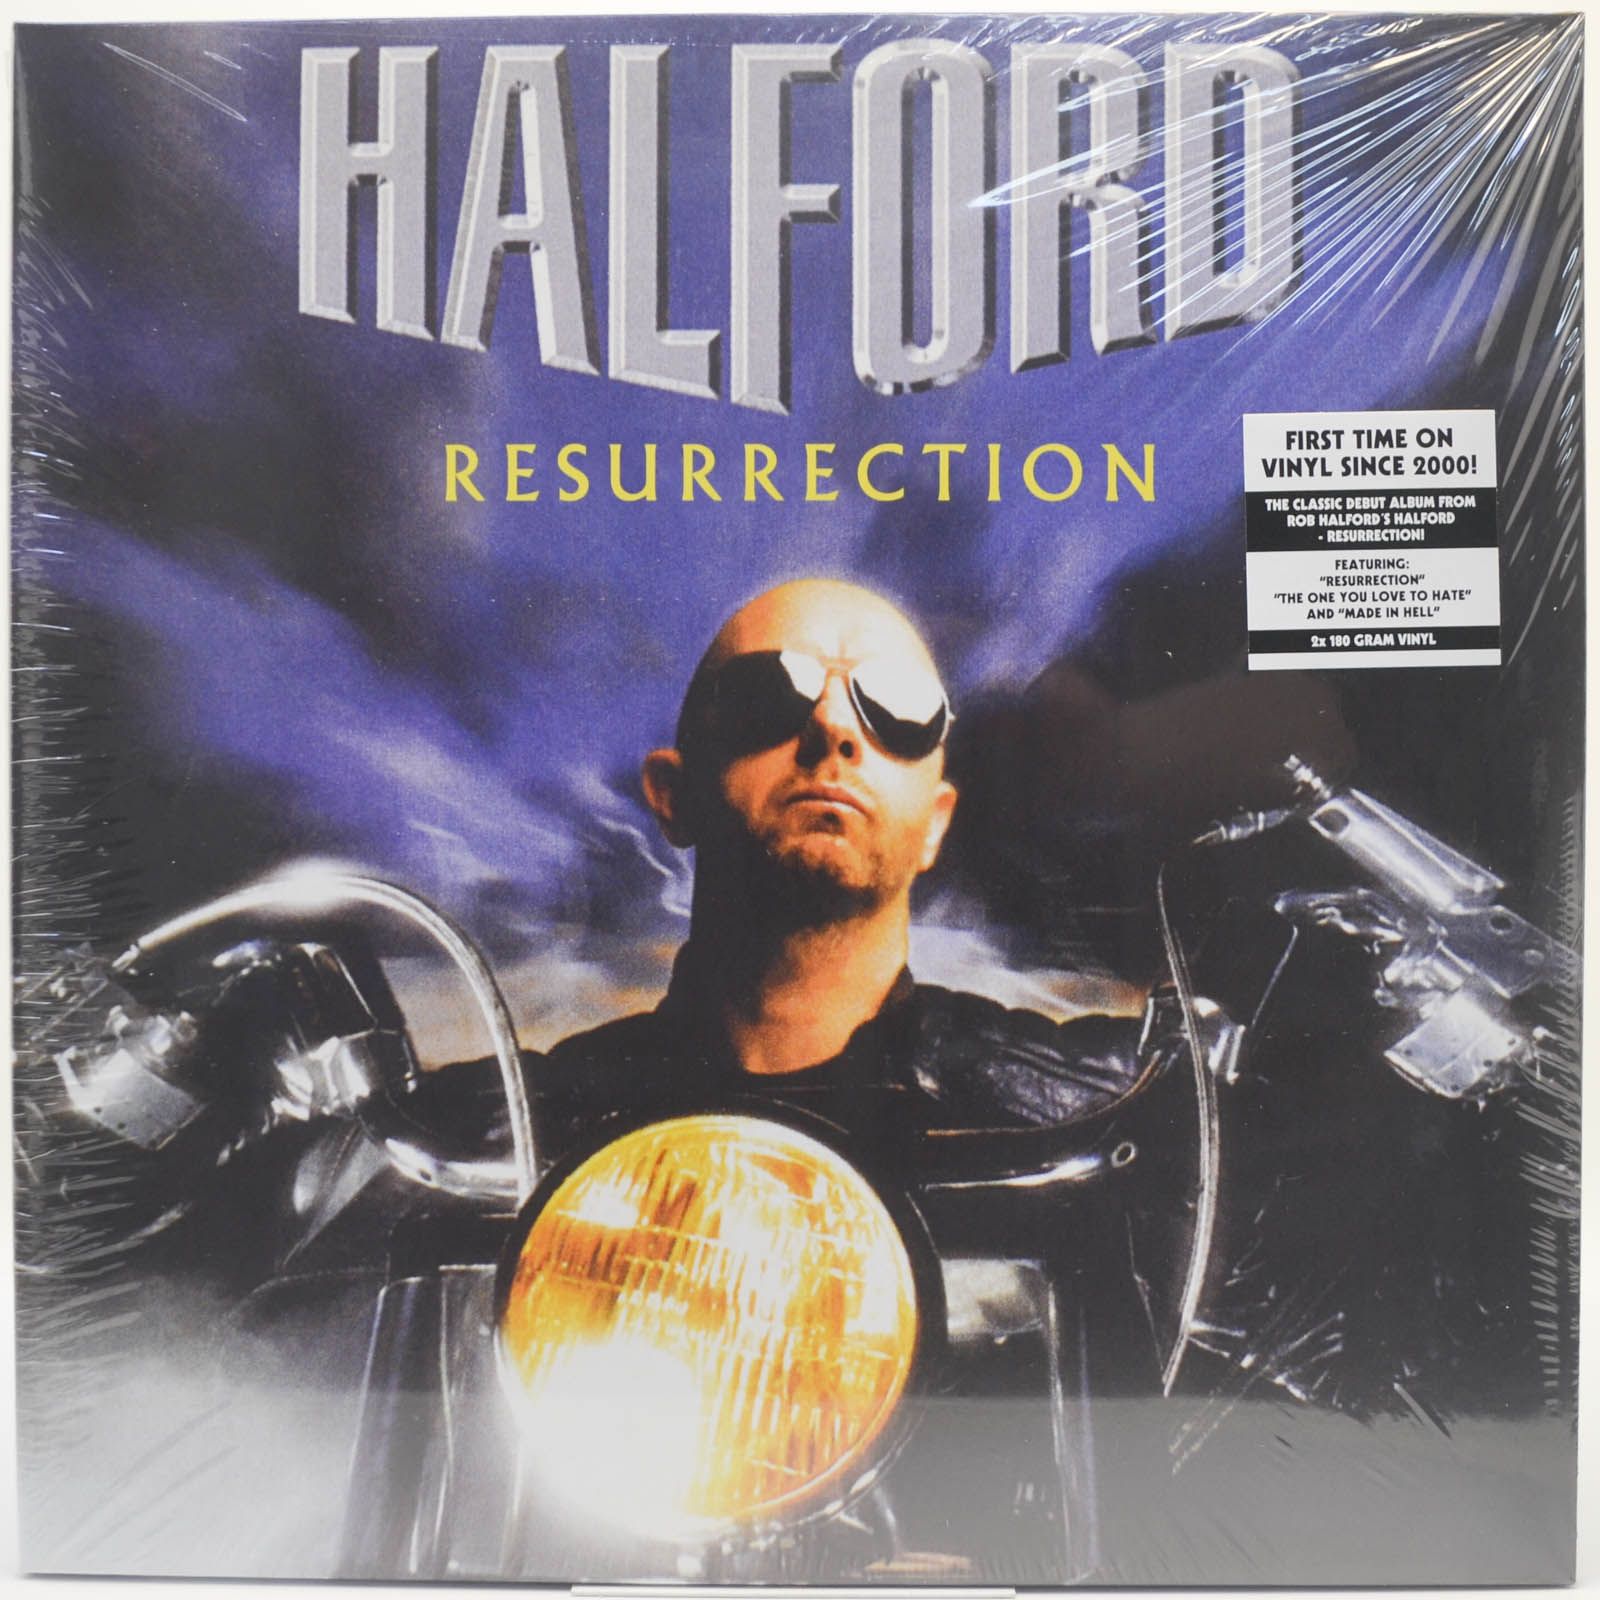 Halford — Resurrection (2LP), 2000